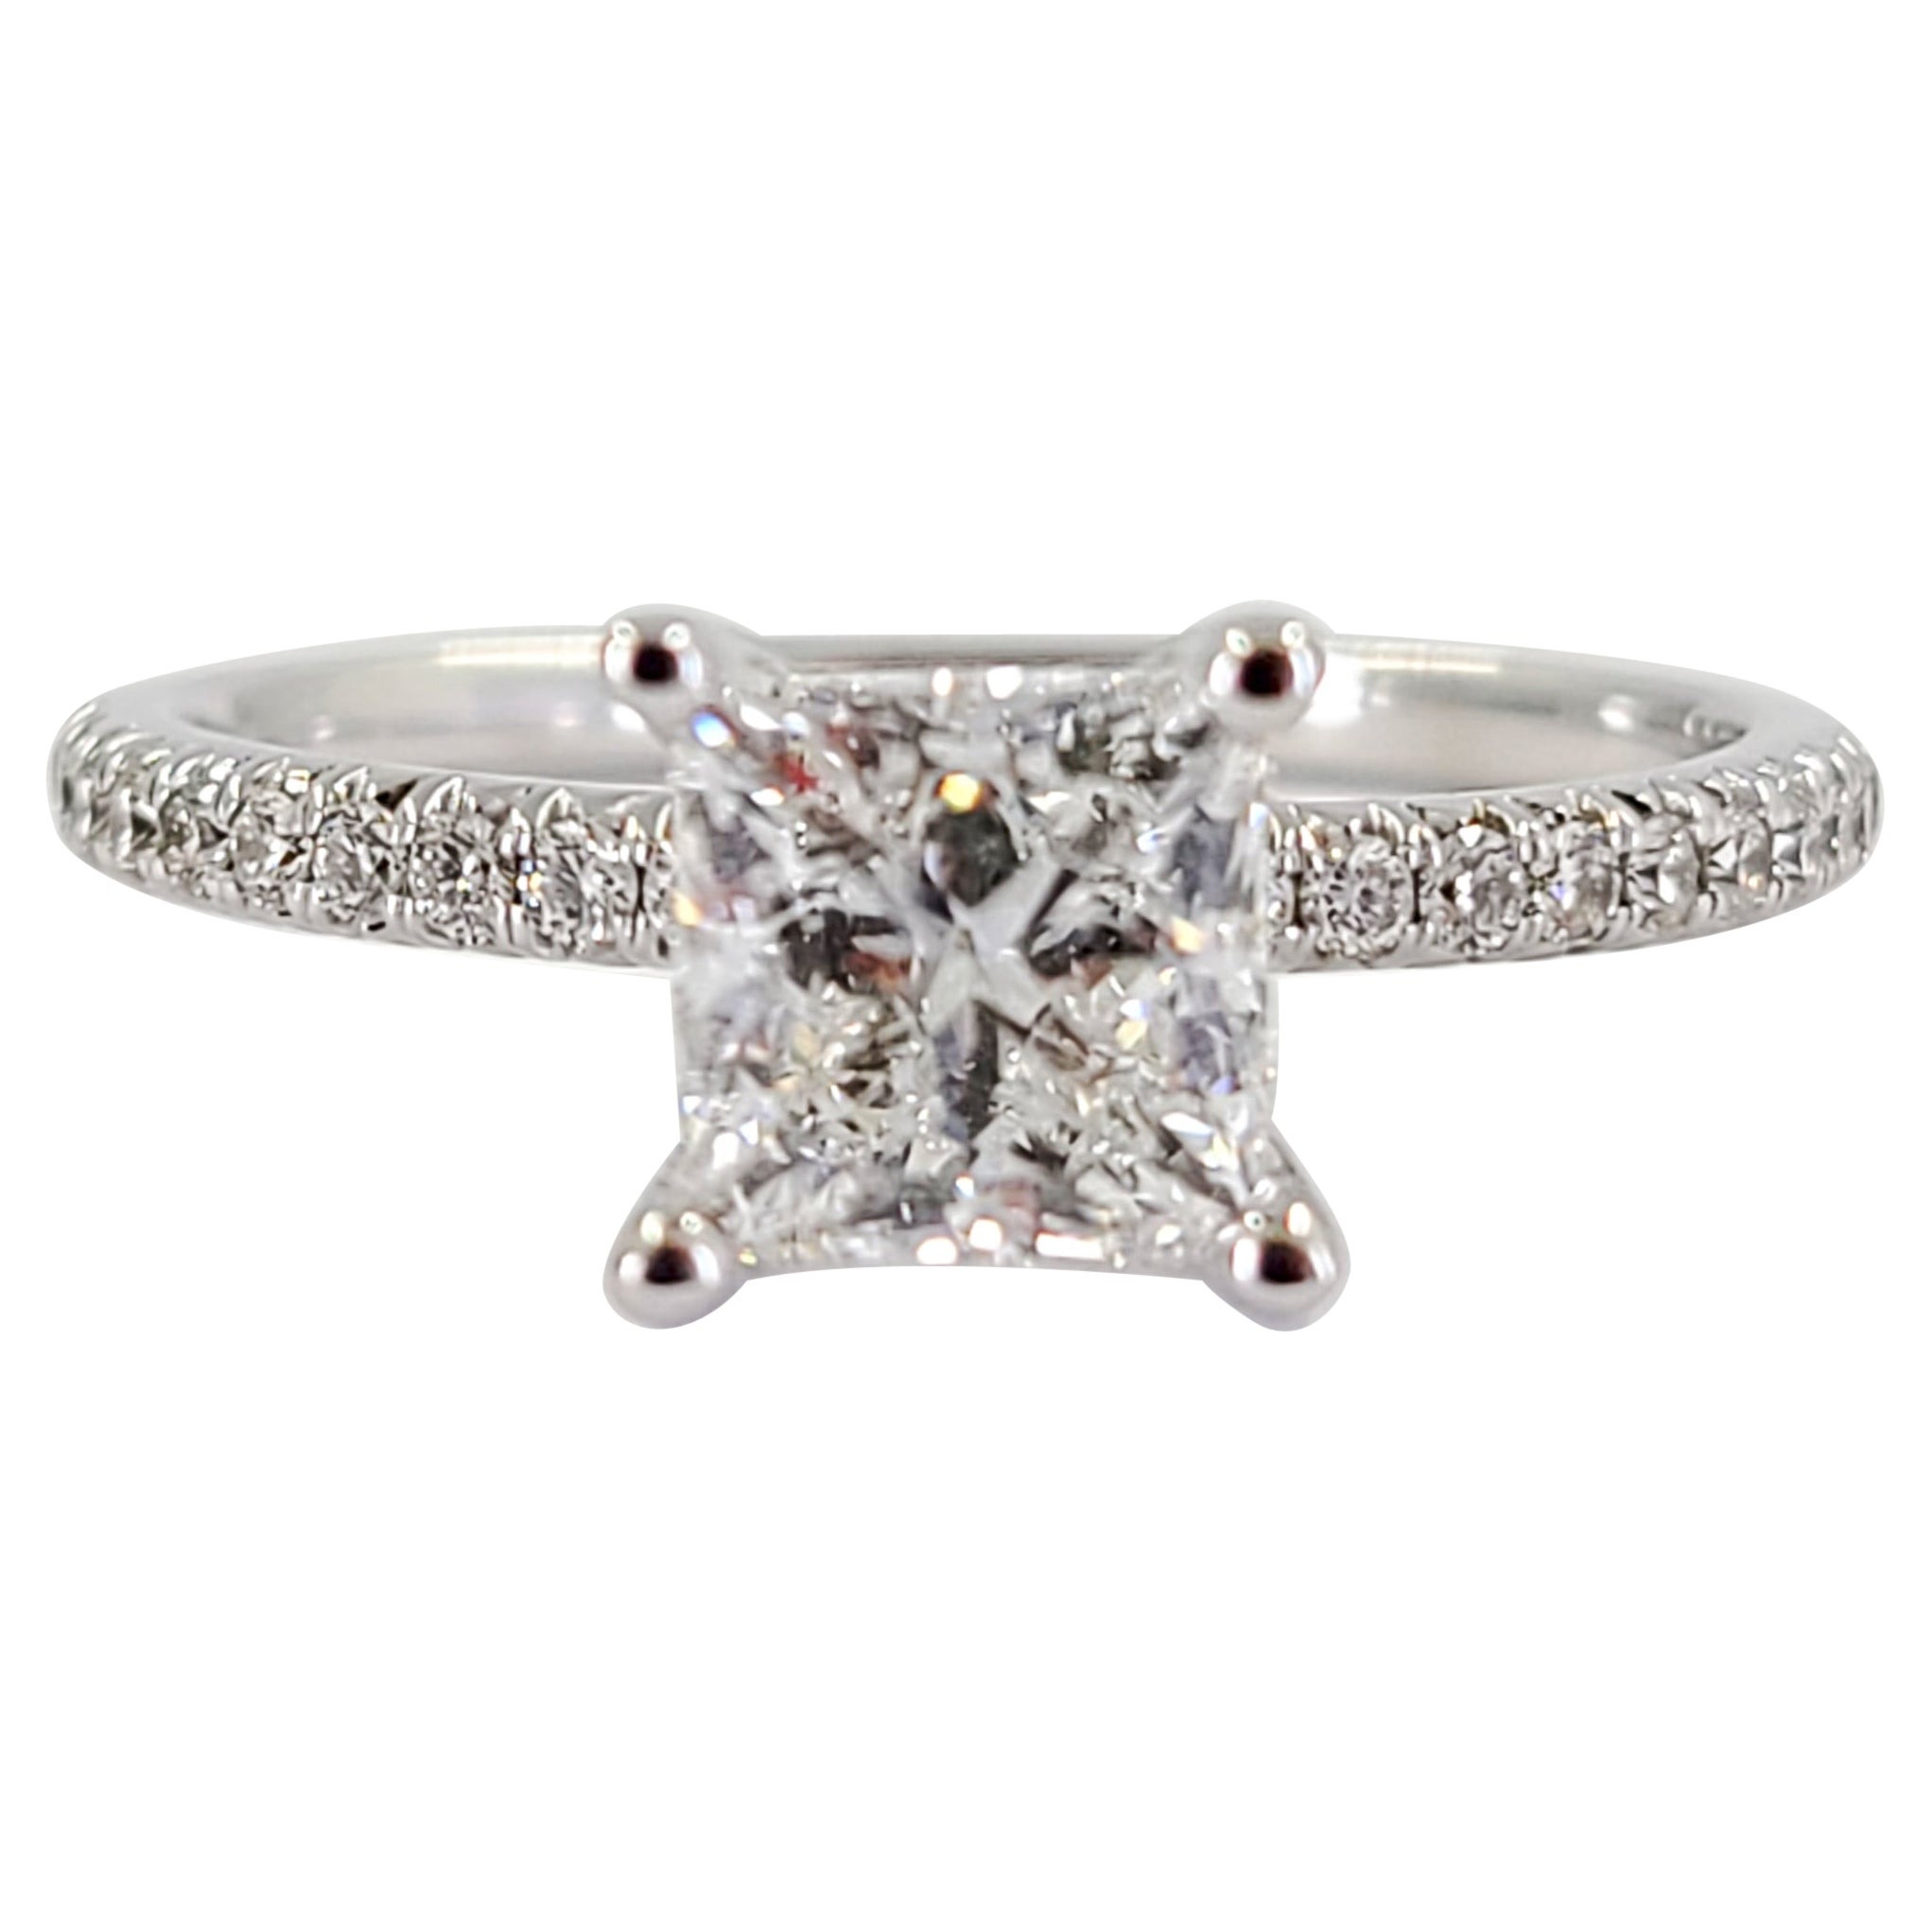 GIA Graded 1.03 Carat Princess Cut Diamond Engagement Ring